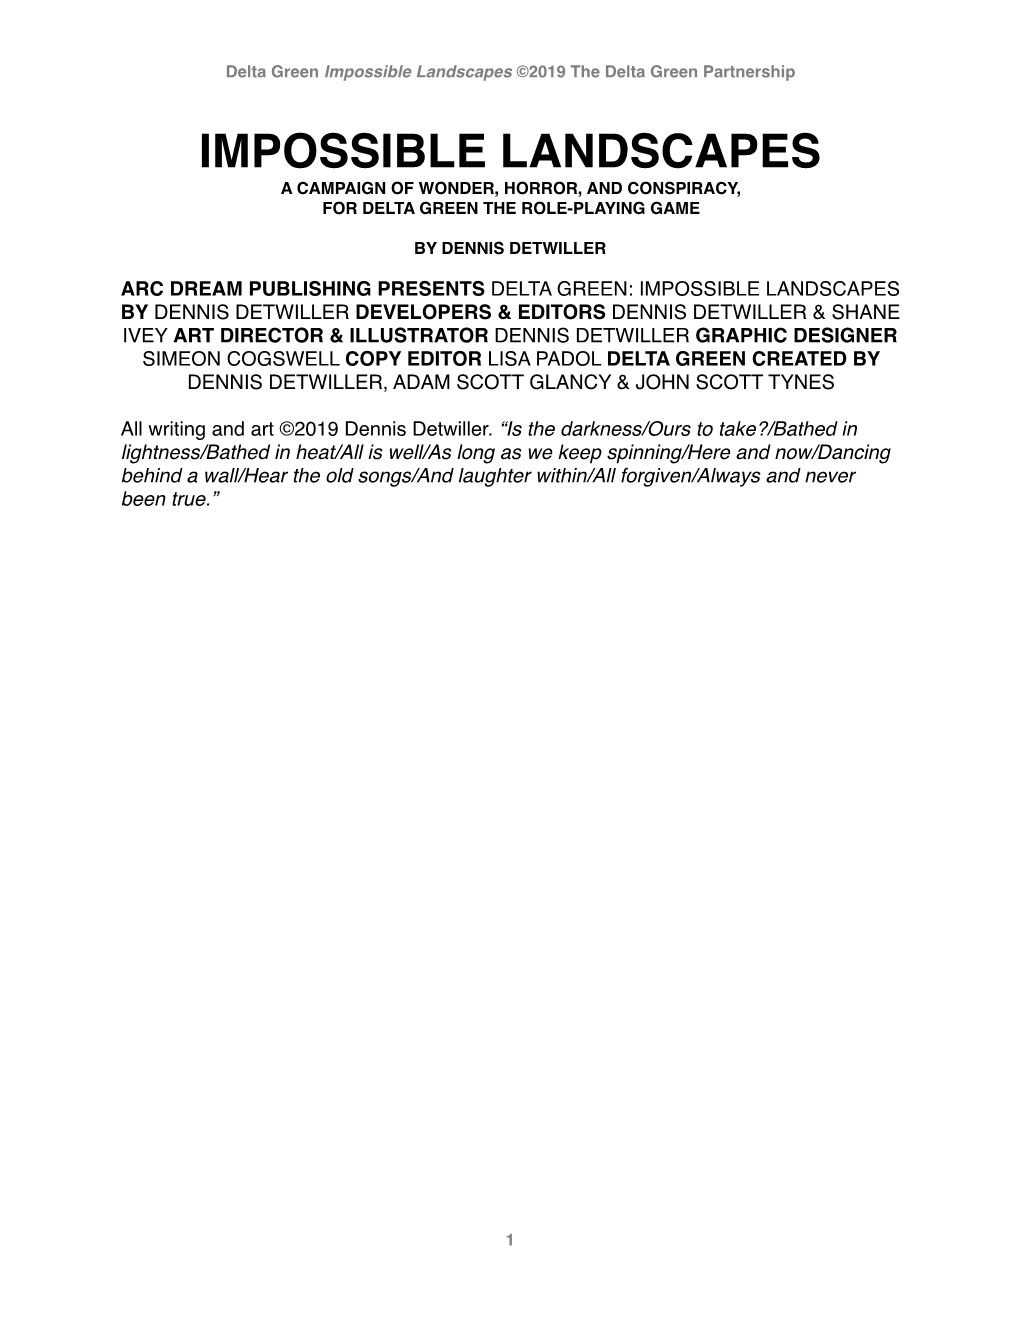 Impossible Landscapes Final 2019